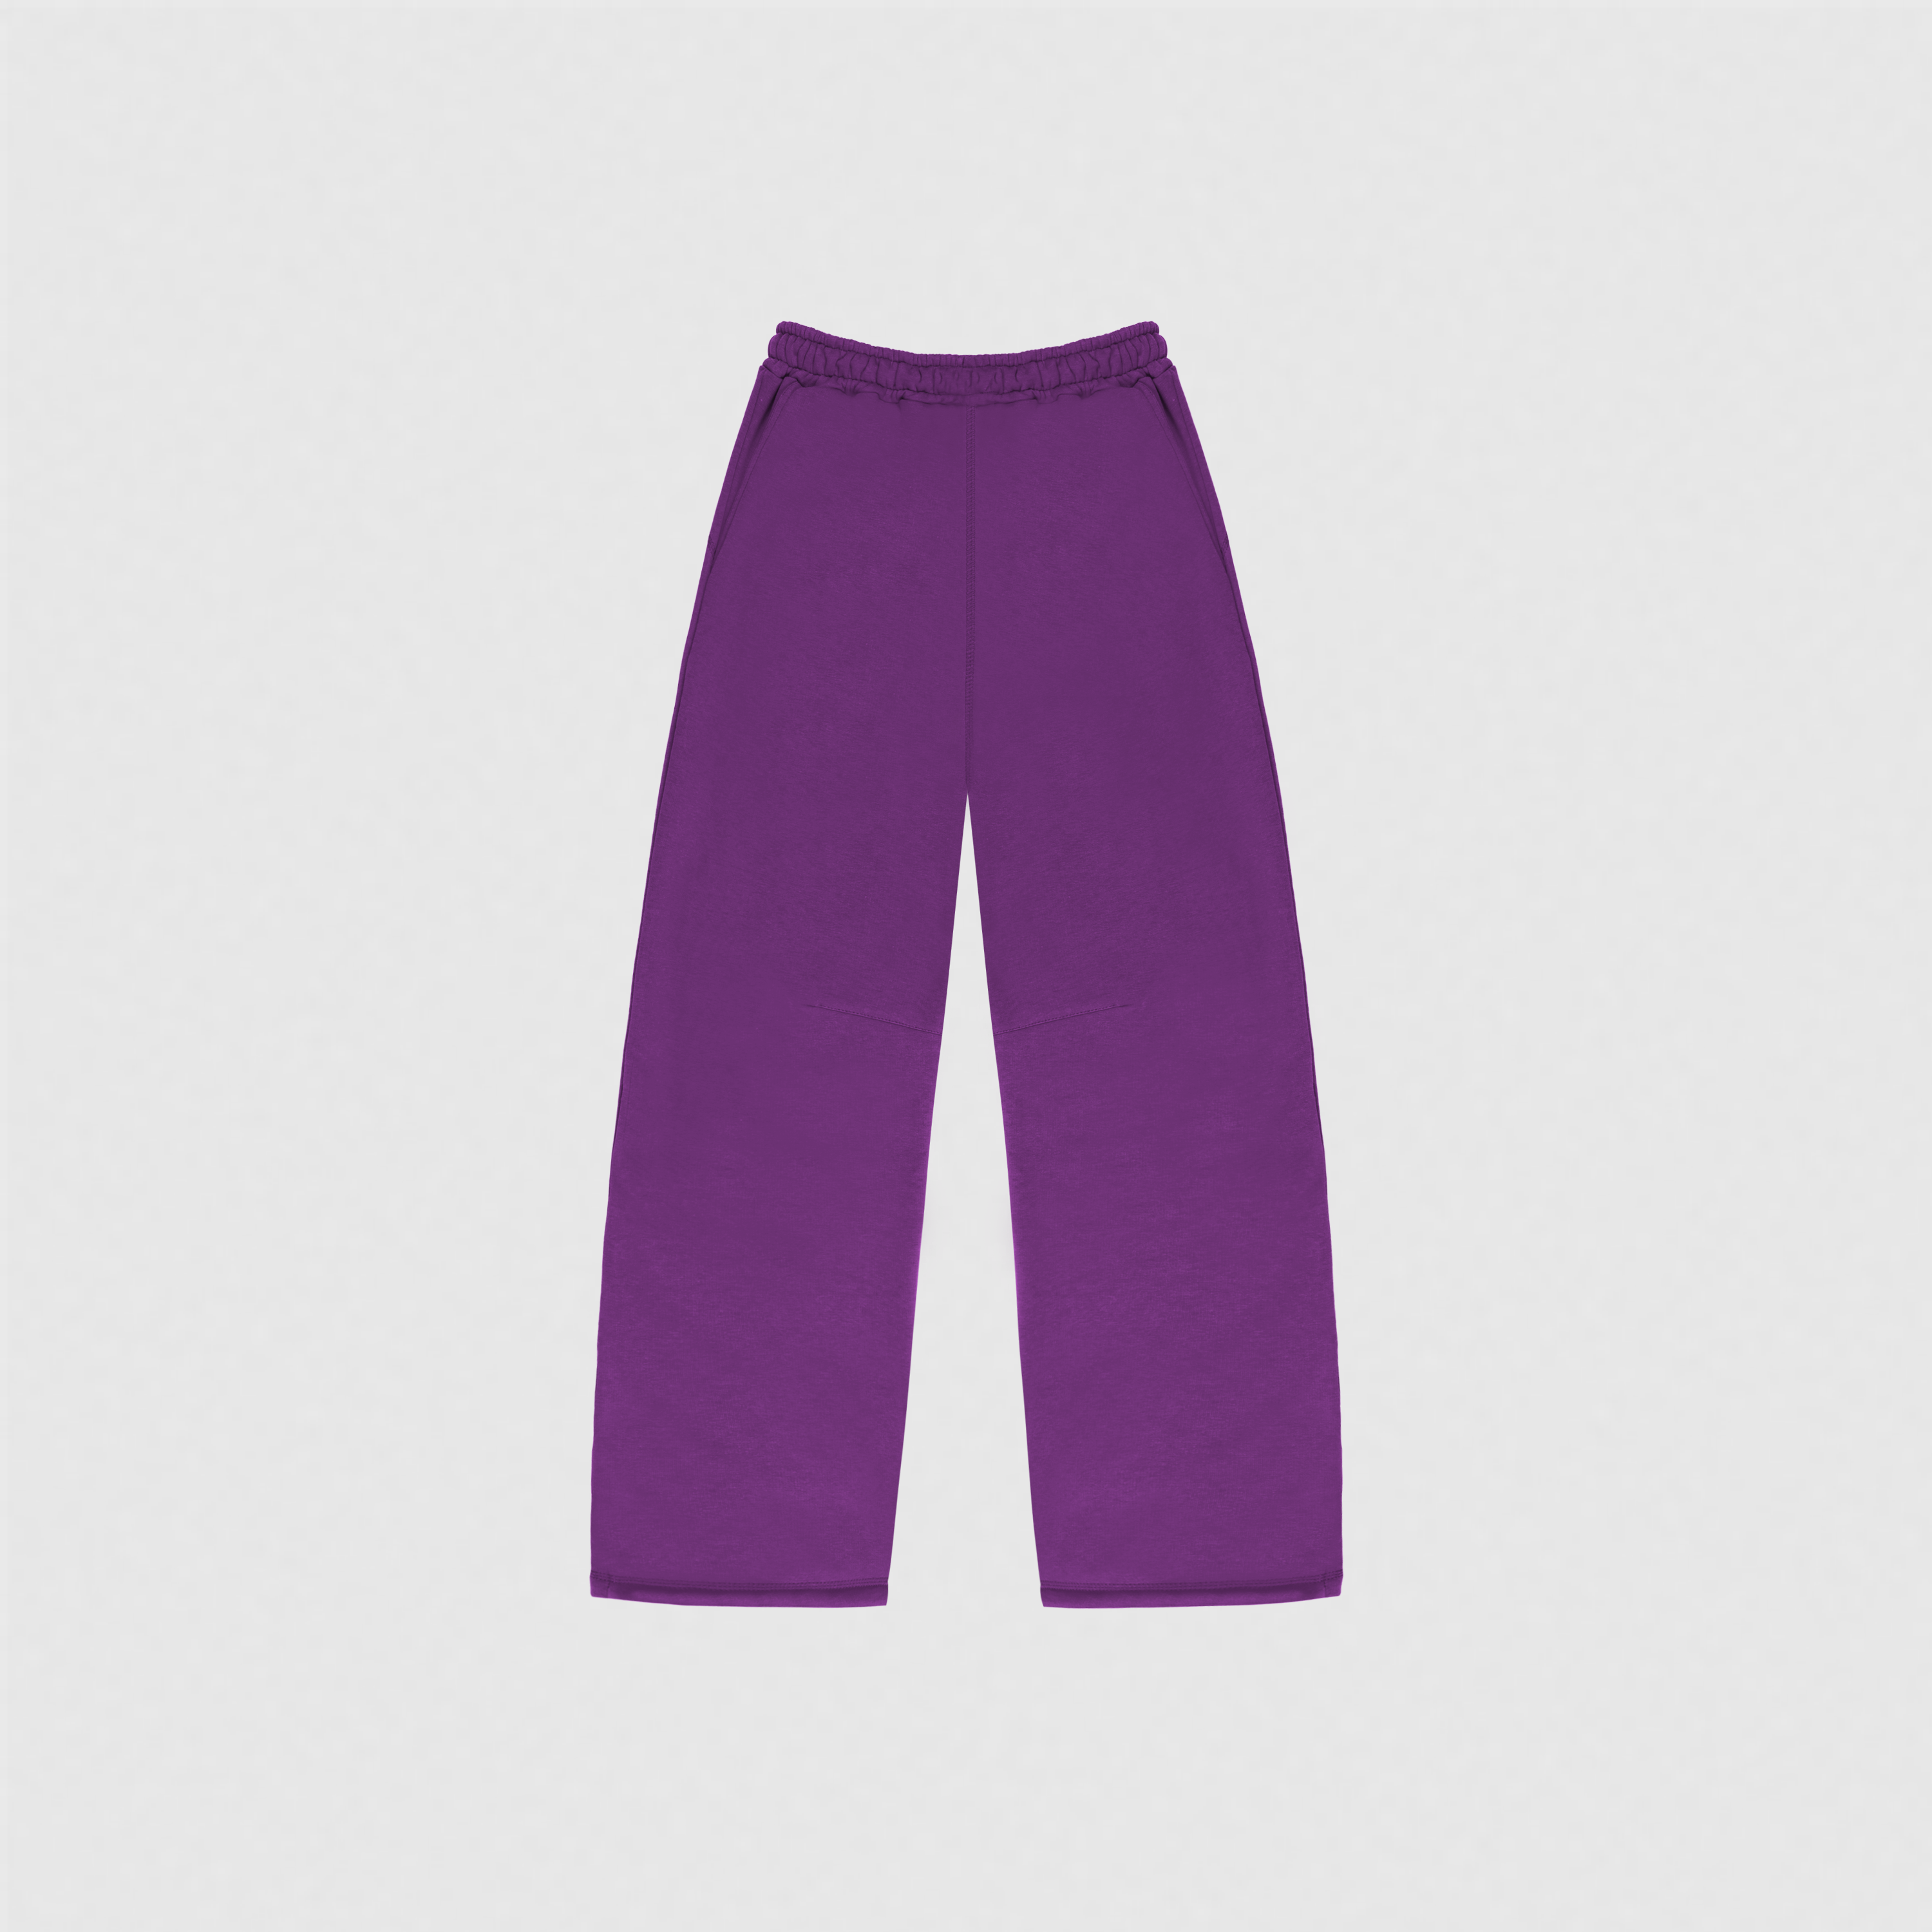 EVERYDAY IRIS PURPLE SWEATPANTS-Sweatpant-Lomalab-XSMALL-SMALL-Purple-Lomalab